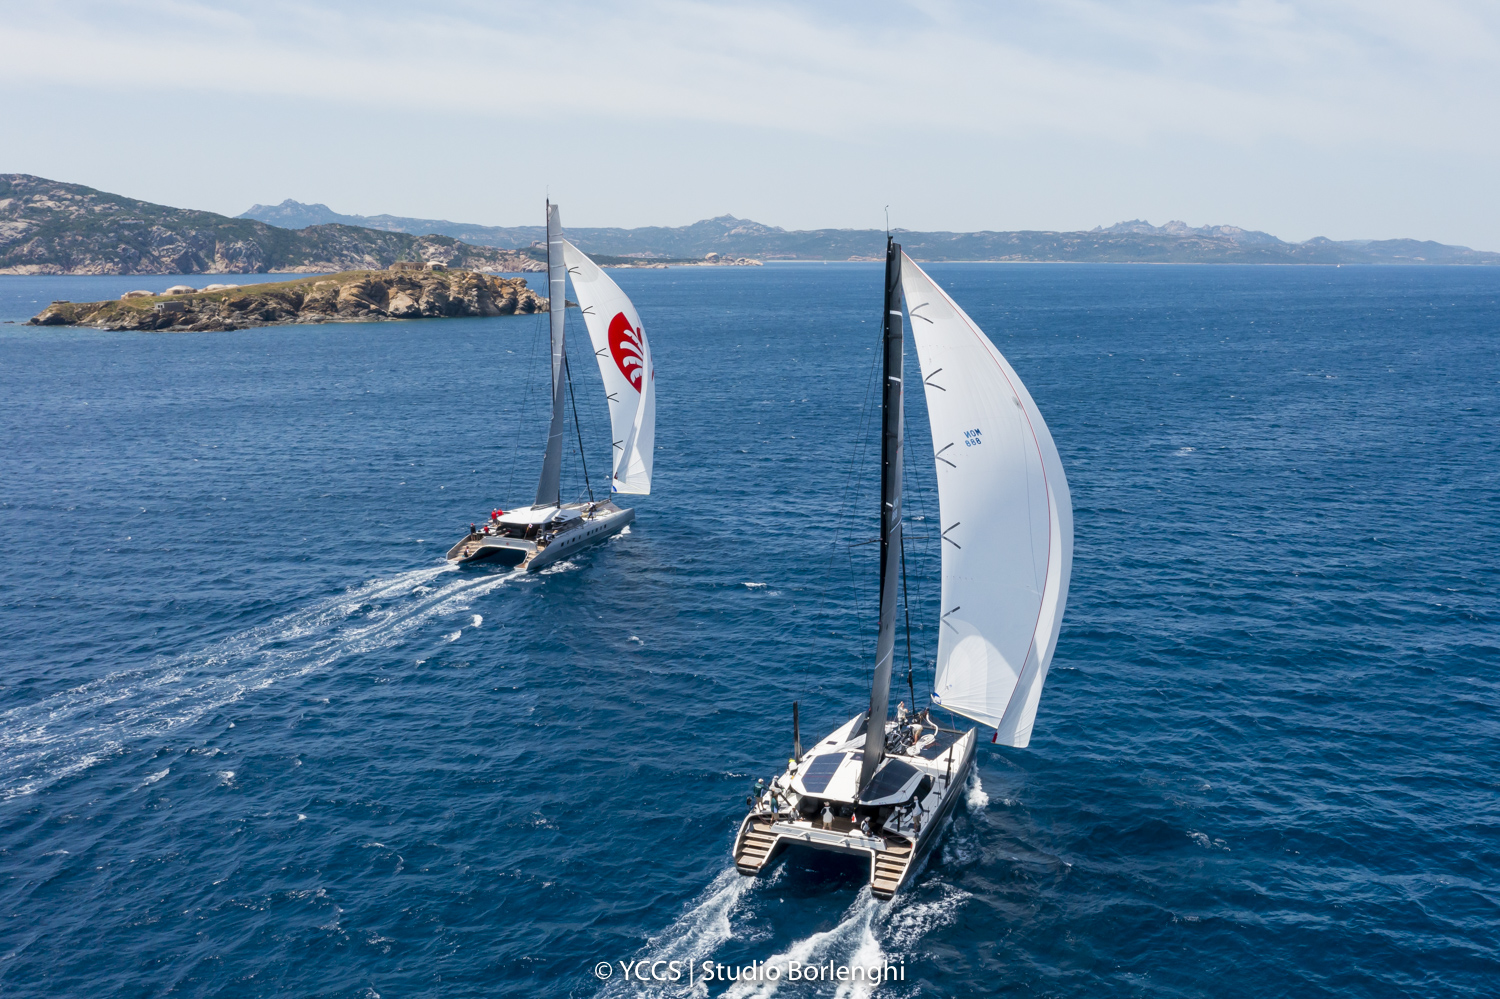 Loro Piana Superyacht Regatta, La Maddalena Archipelago serves up third day of superb sailing - News - Yacht Club Costa Smeralda